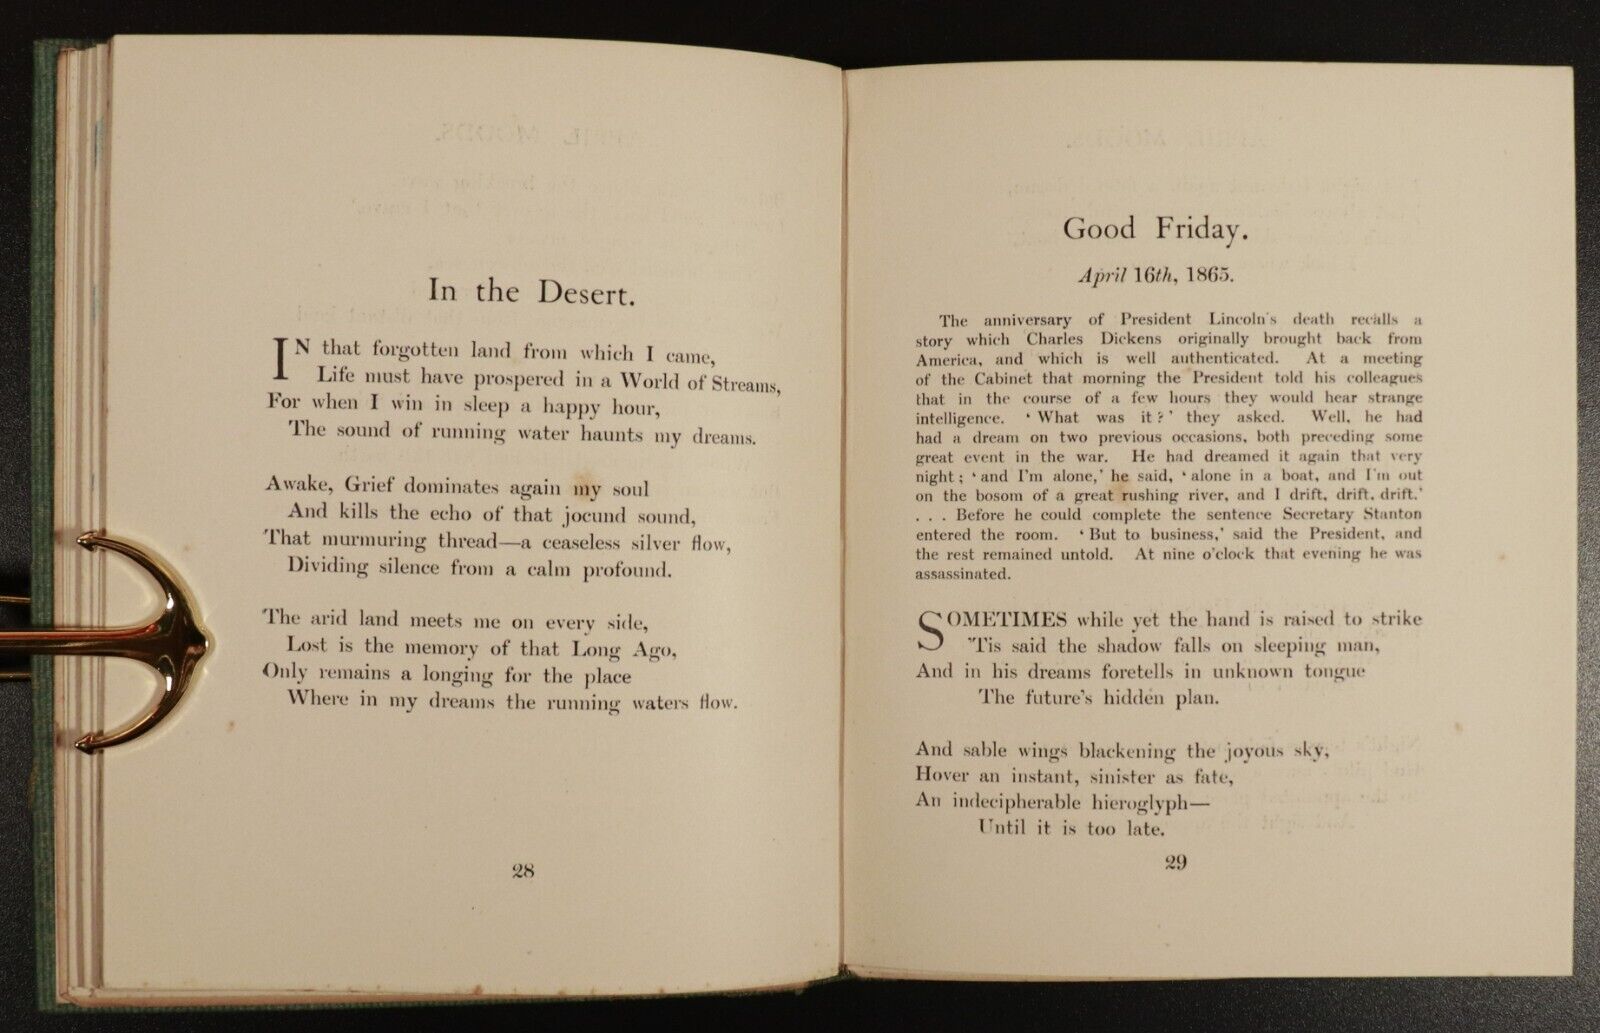 1912 April Moods by Beatrice Allhusen Antique British Poetry Book Female Poet